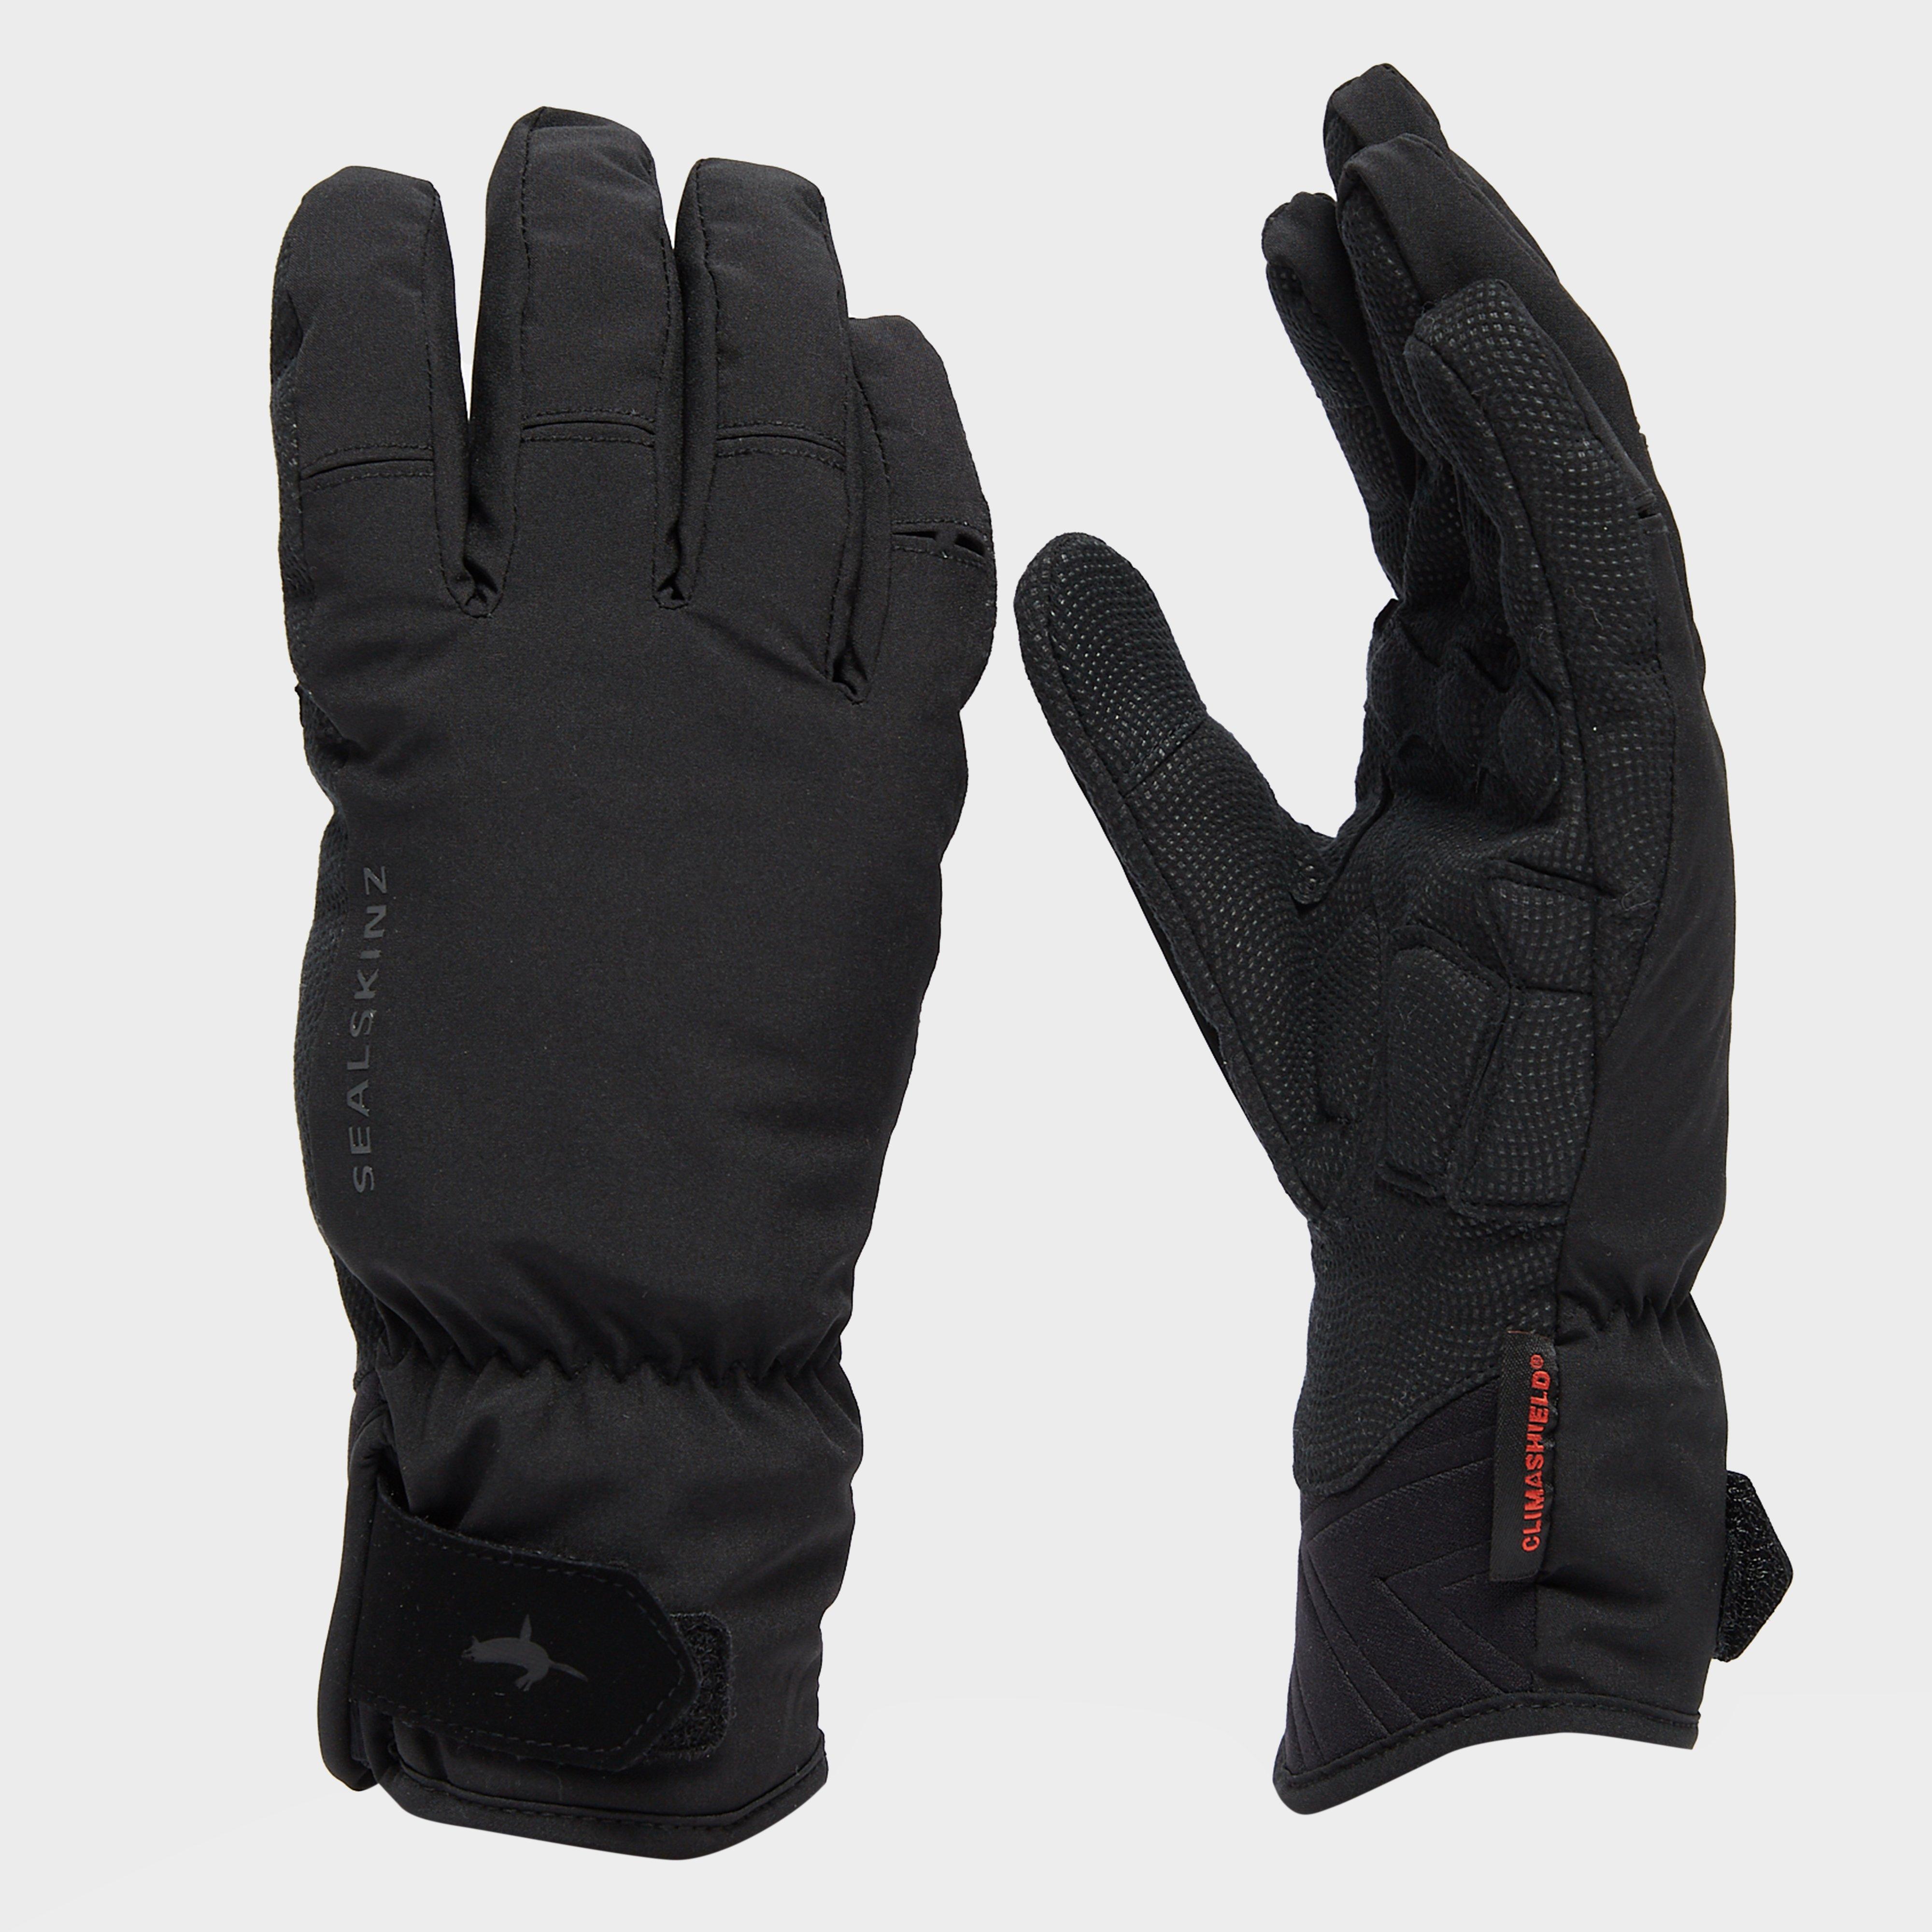  Sealskinz Waterproof Extreme Cold Gloves, Black